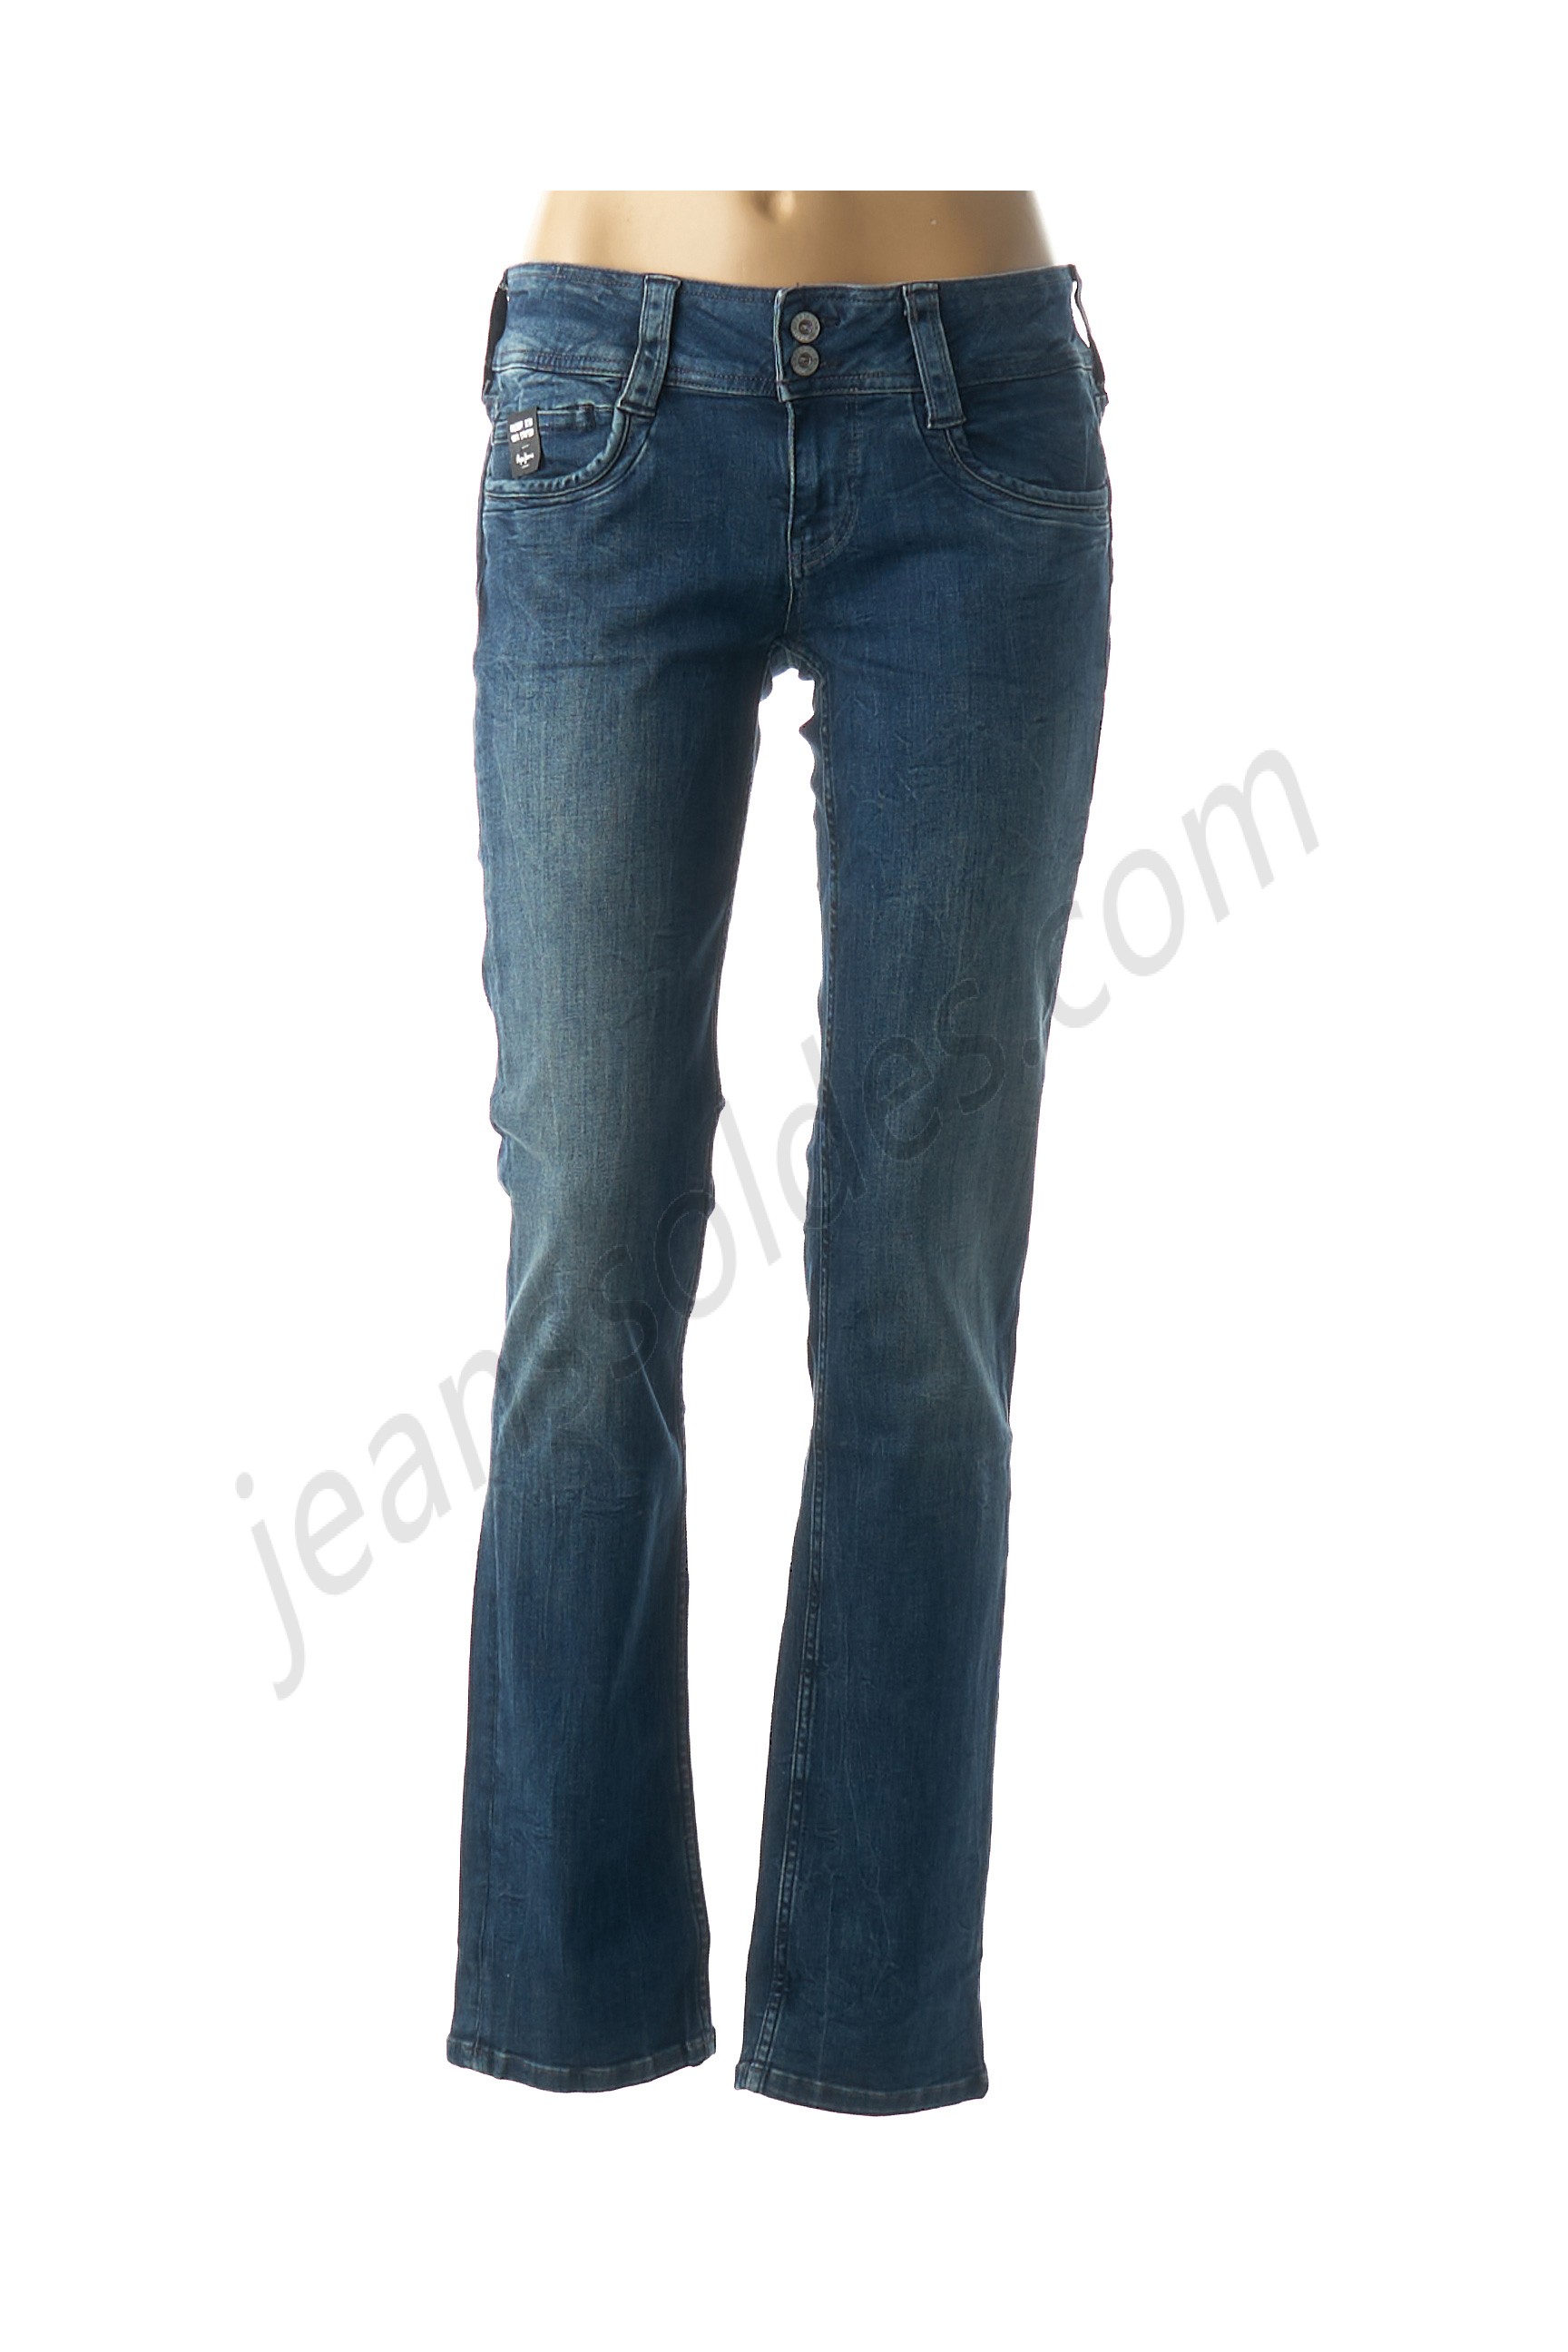 pepe jeans-Jeans coupe droite prix d’amis - pepe jeans-Jeans coupe droite prix d’amis